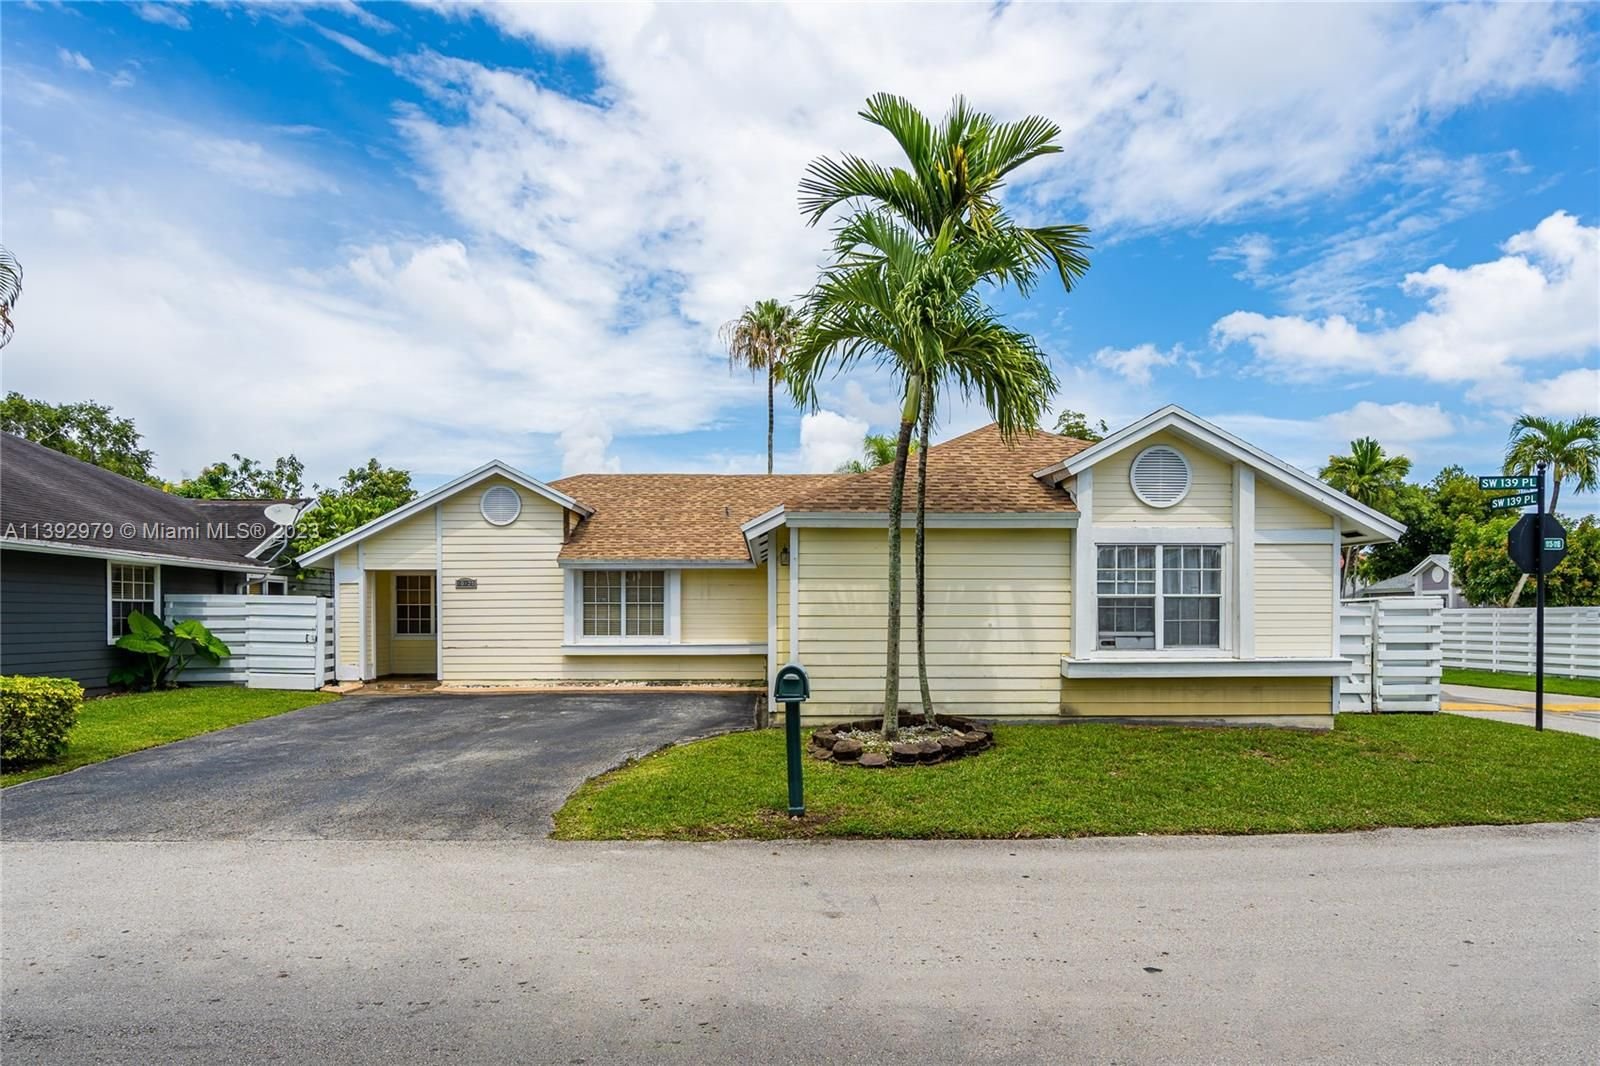 Real estate property located at 10125 139th Pl, Miami-Dade County, Miami, FL